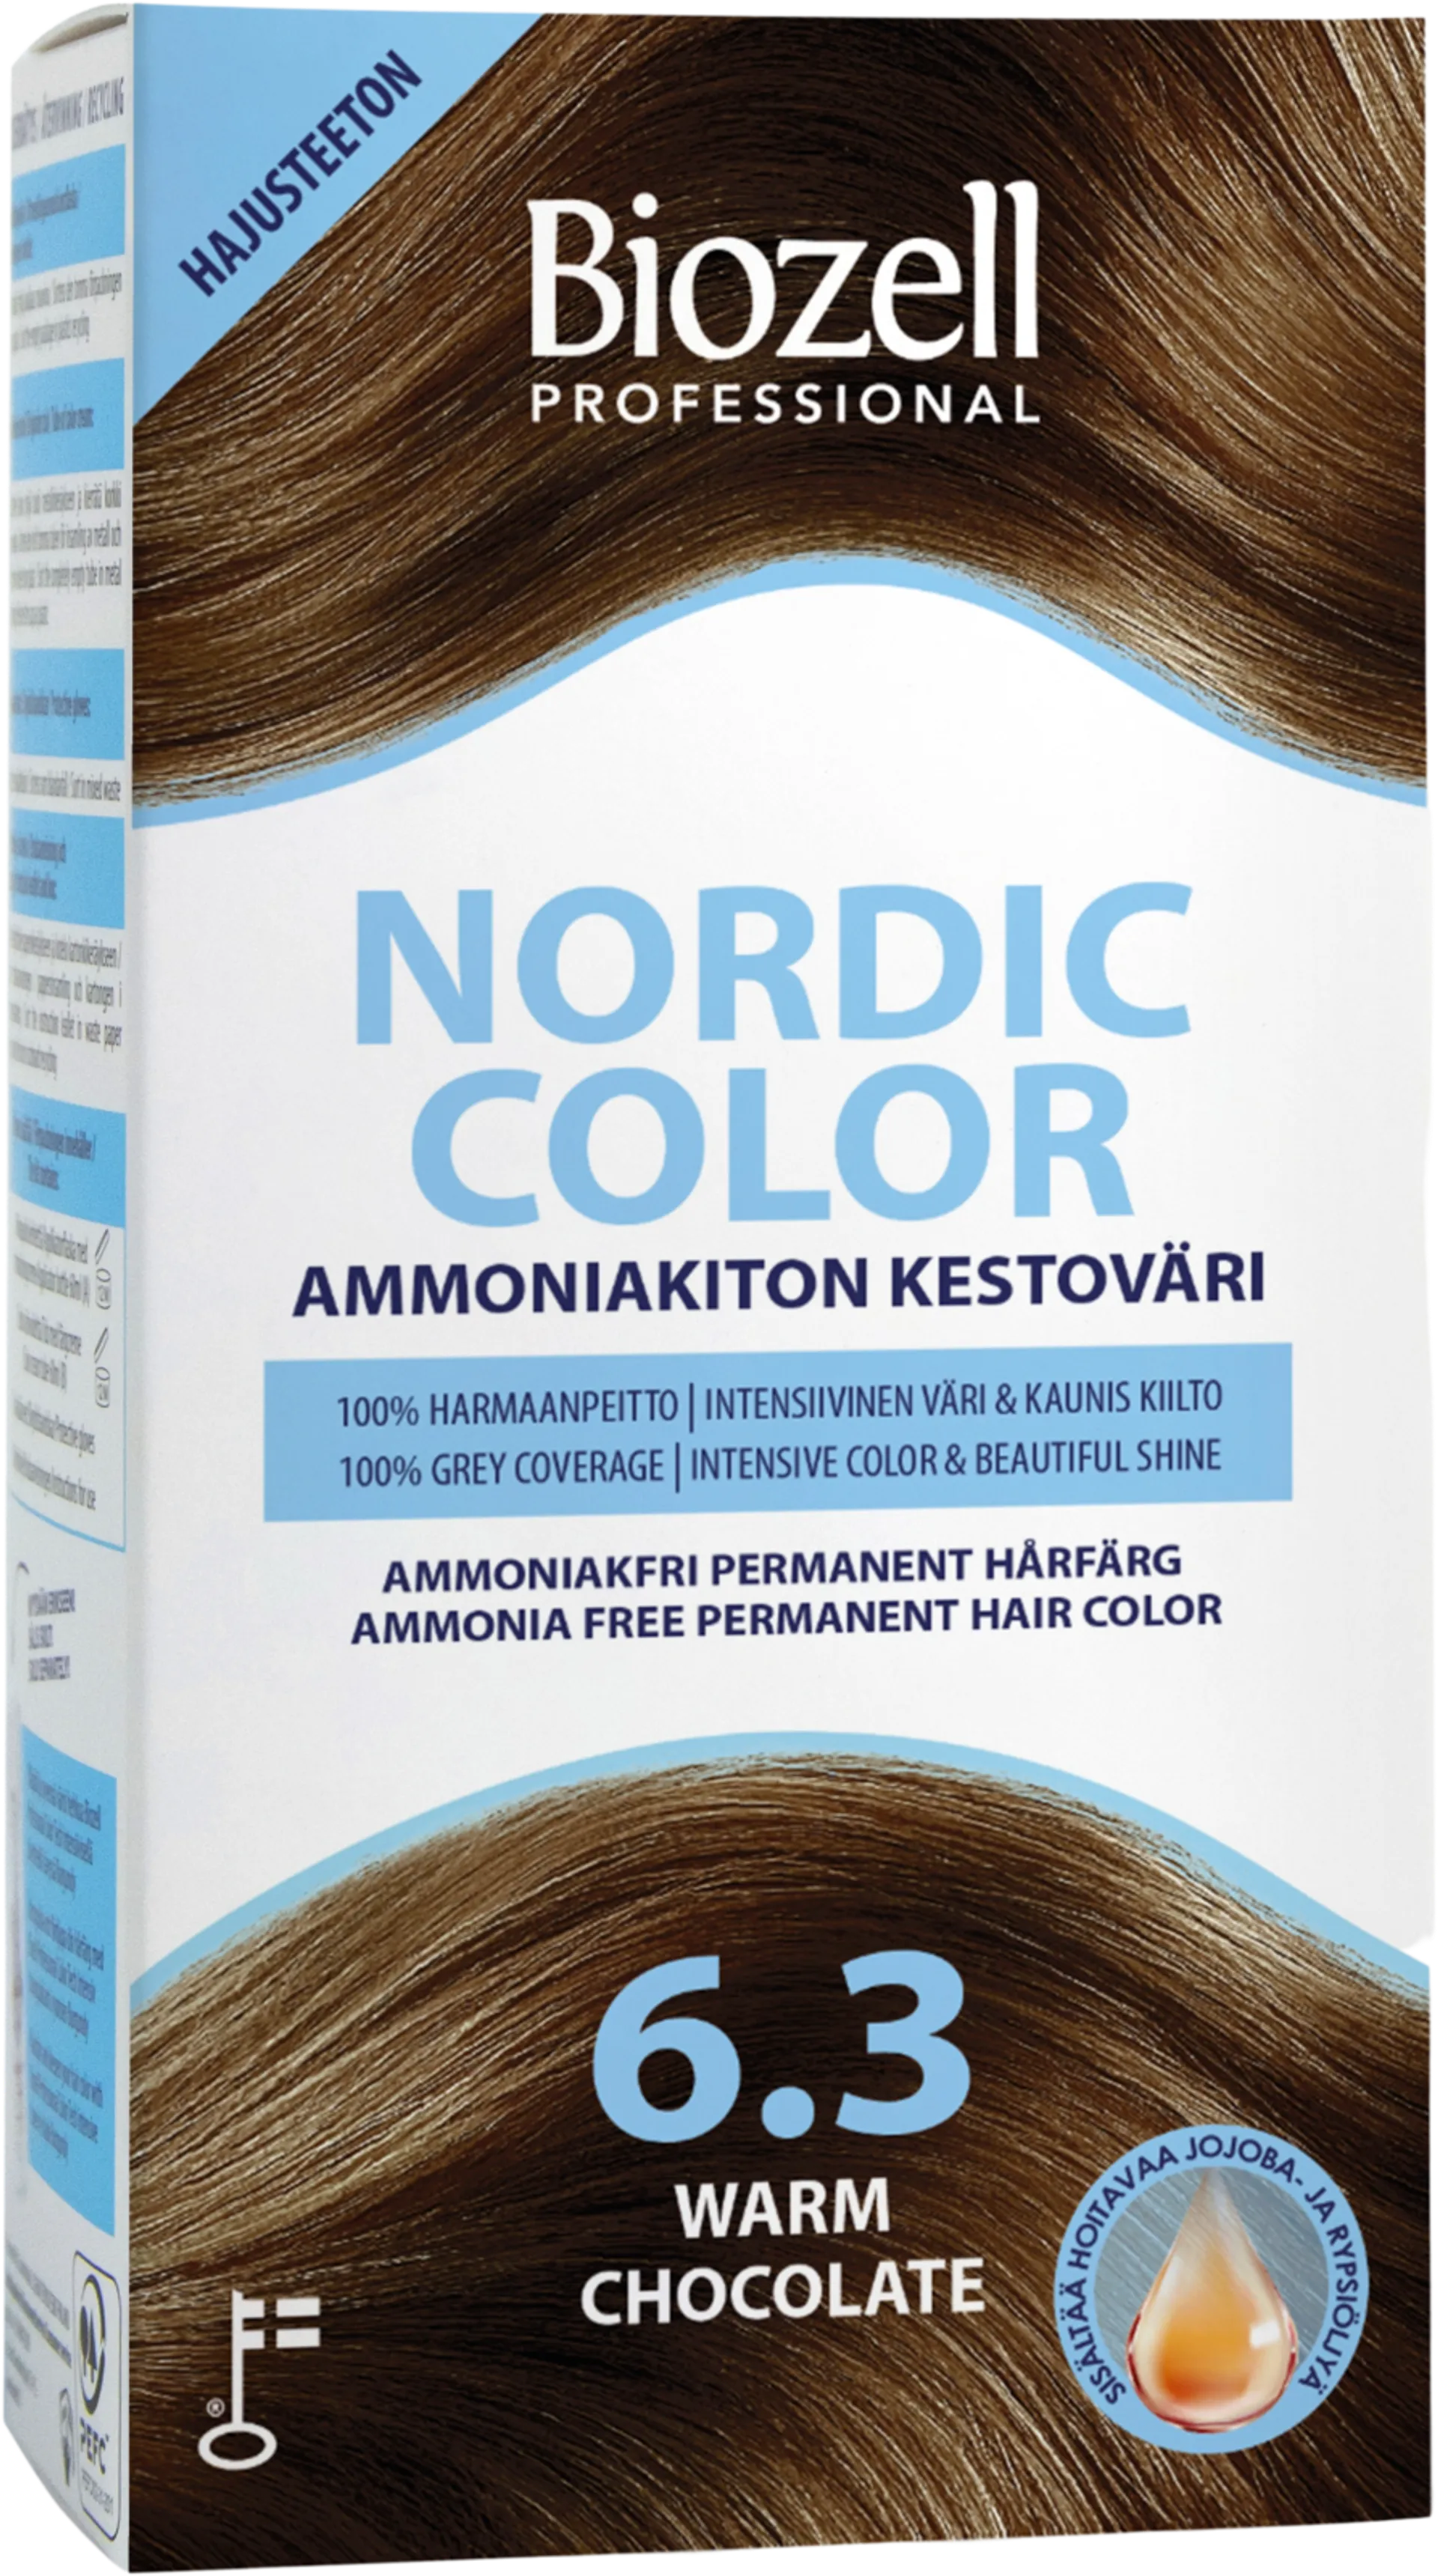 Biozell Professional Nordic Color ammoniakiton kestoväri Warm Chocolate 6.3 2x60ml